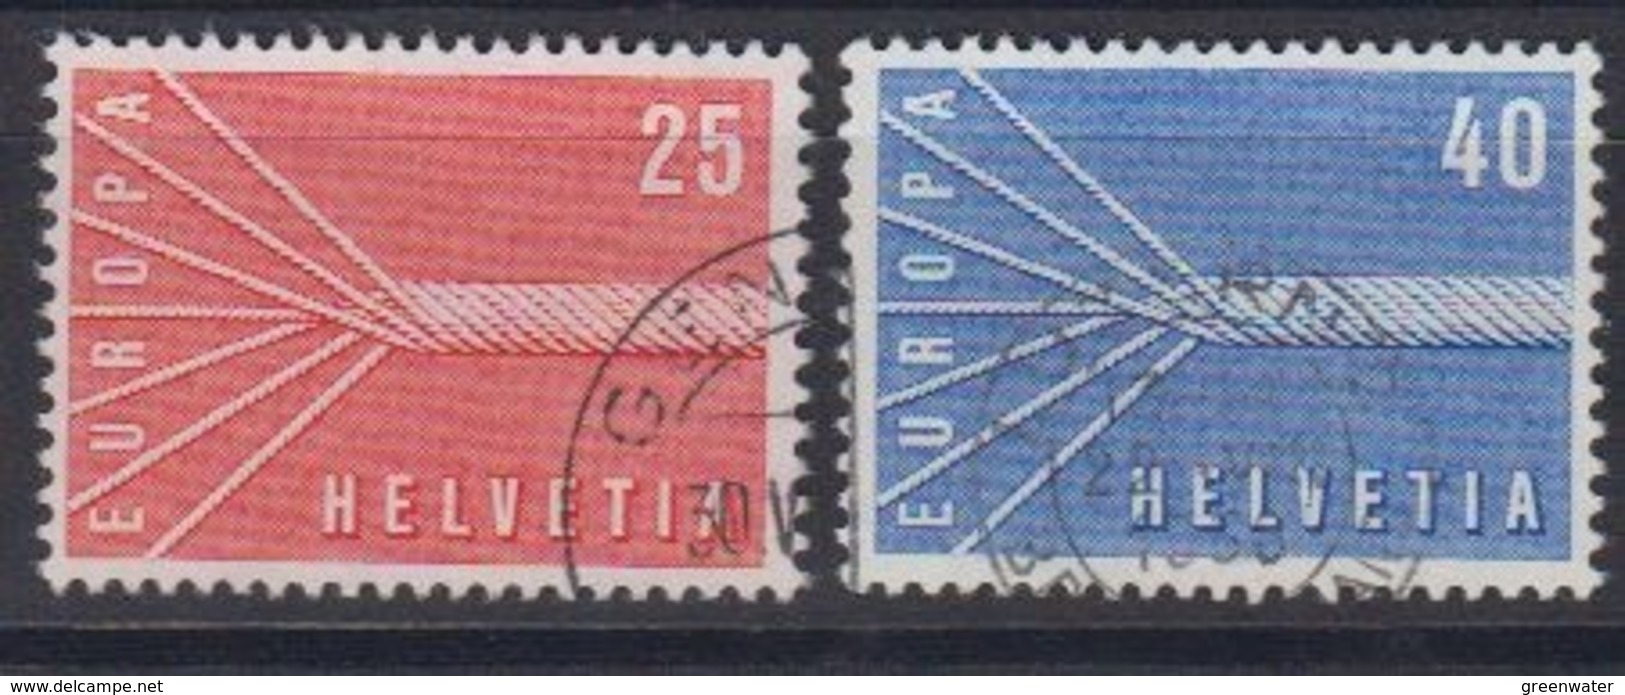 Europa Cept 1957 Switzerland 2v Used (44625C) - 1957